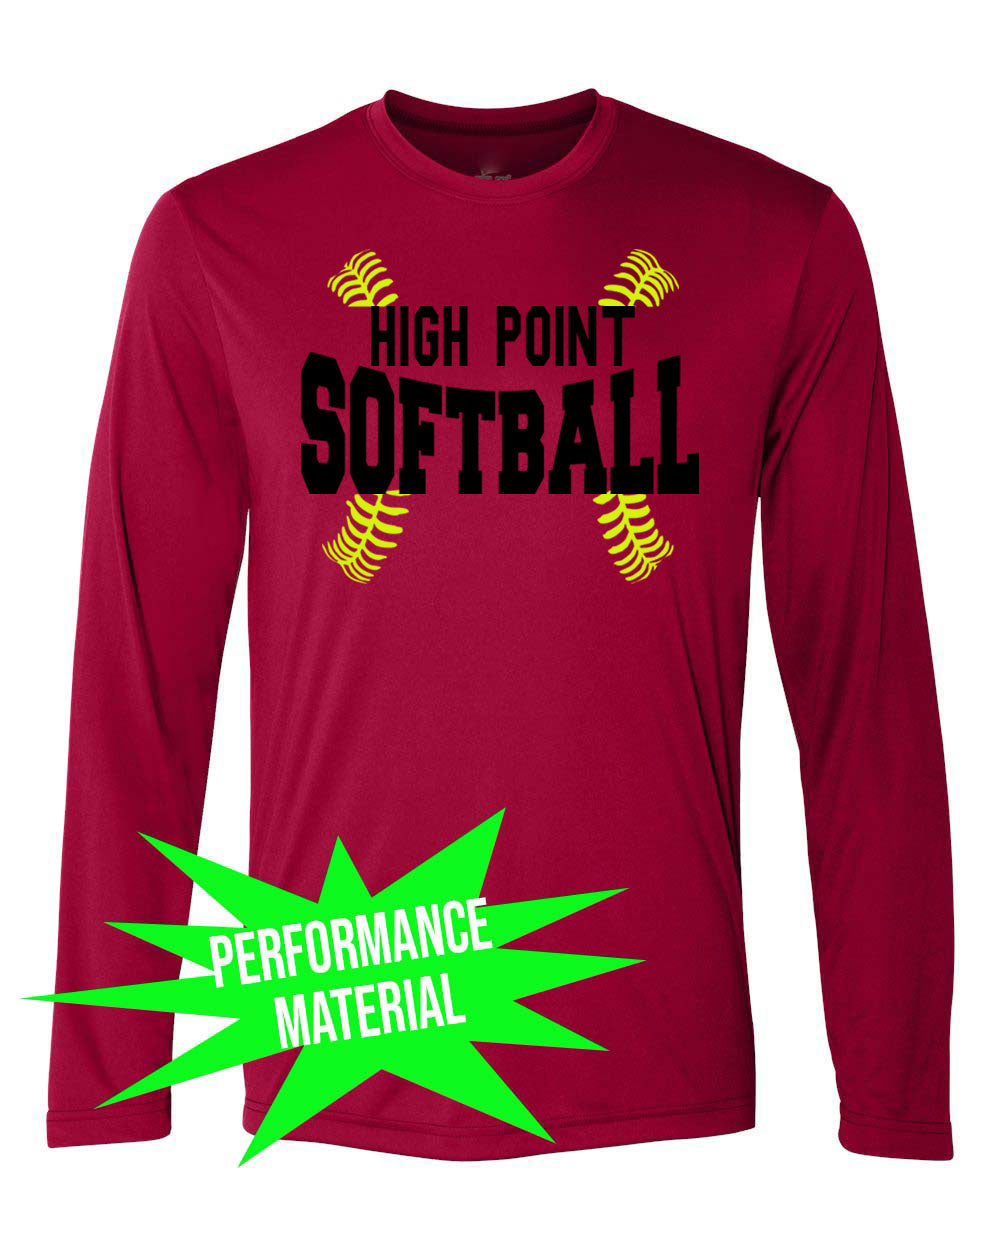 High Point Softball Performance Material Design 1 Long Sleeve Shirt